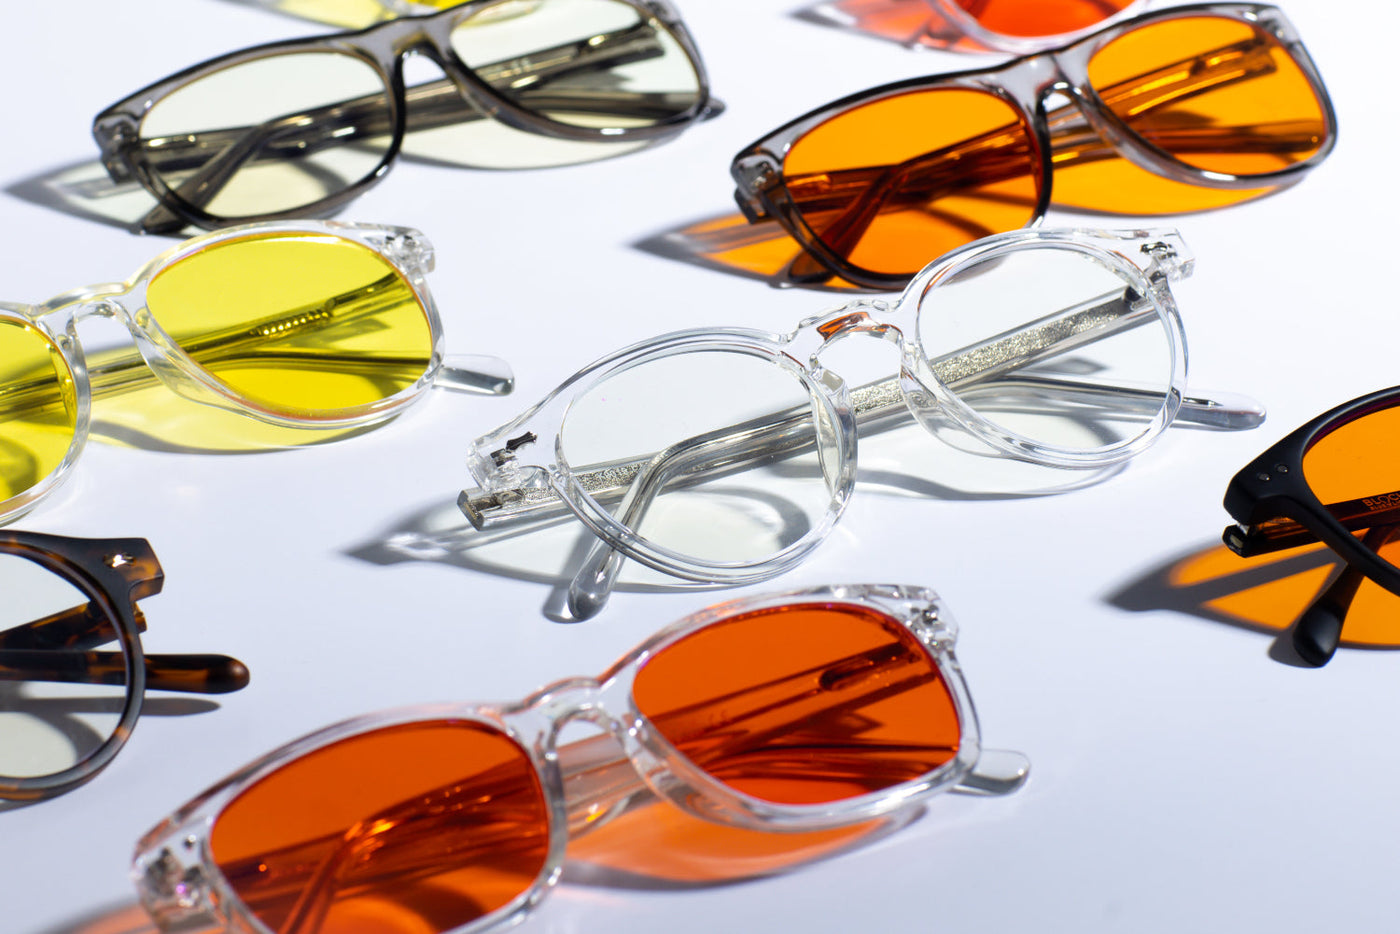 Bolle Sunglasses and Ski Goggles Available with Prescription